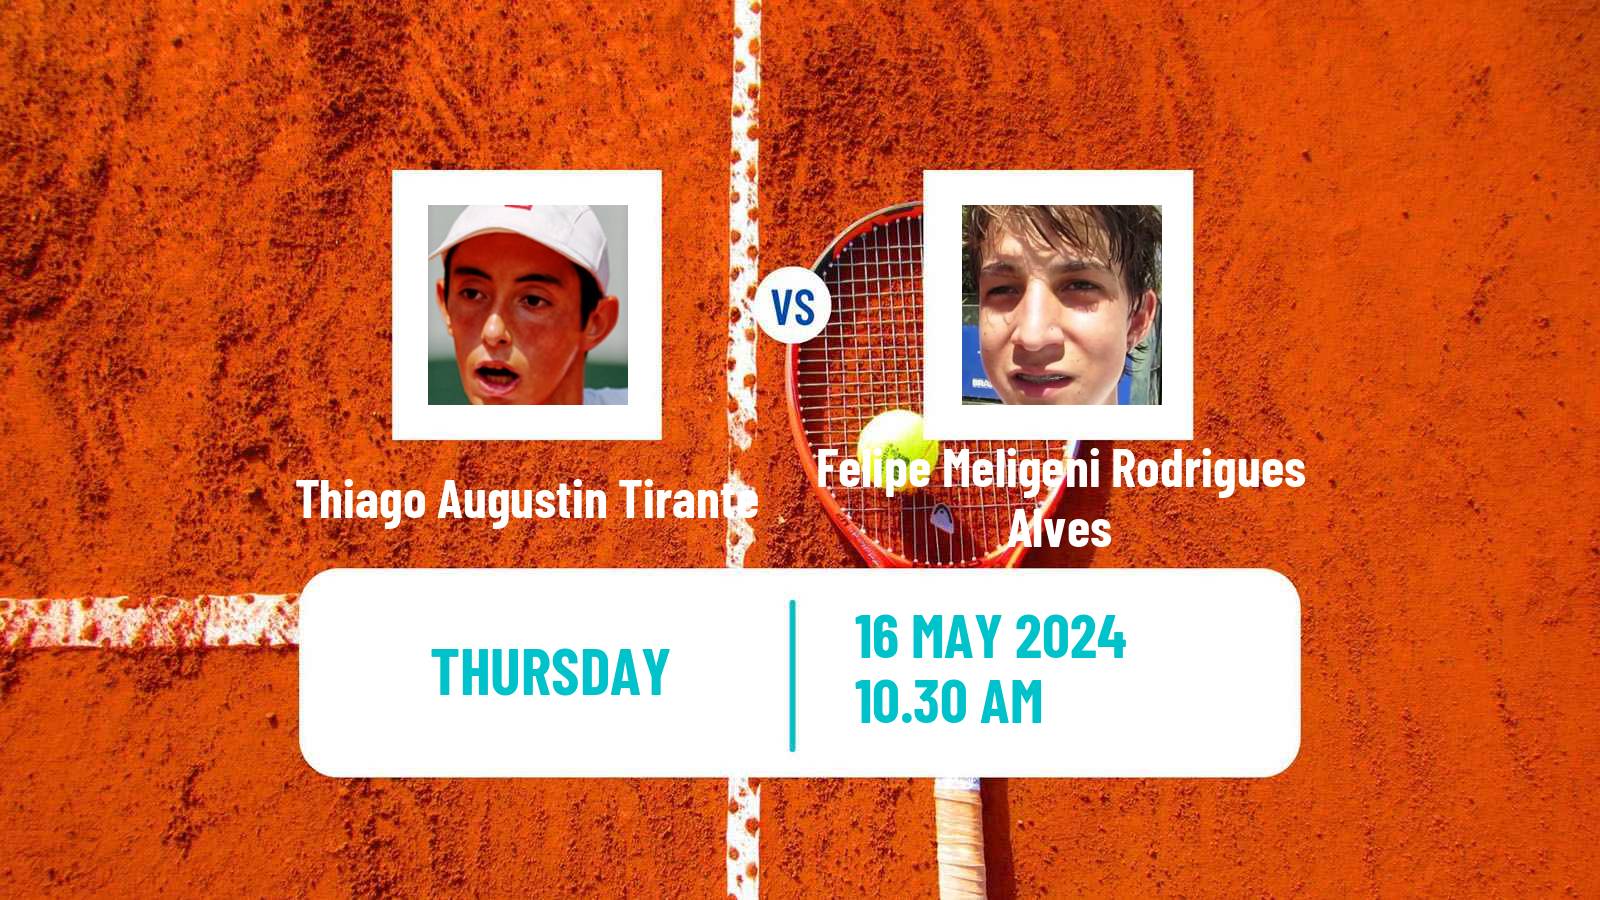 Tennis Turin 2 Challenger Men Thiago Augustin Tirante - Felipe Meligeni Rodrigues Alves